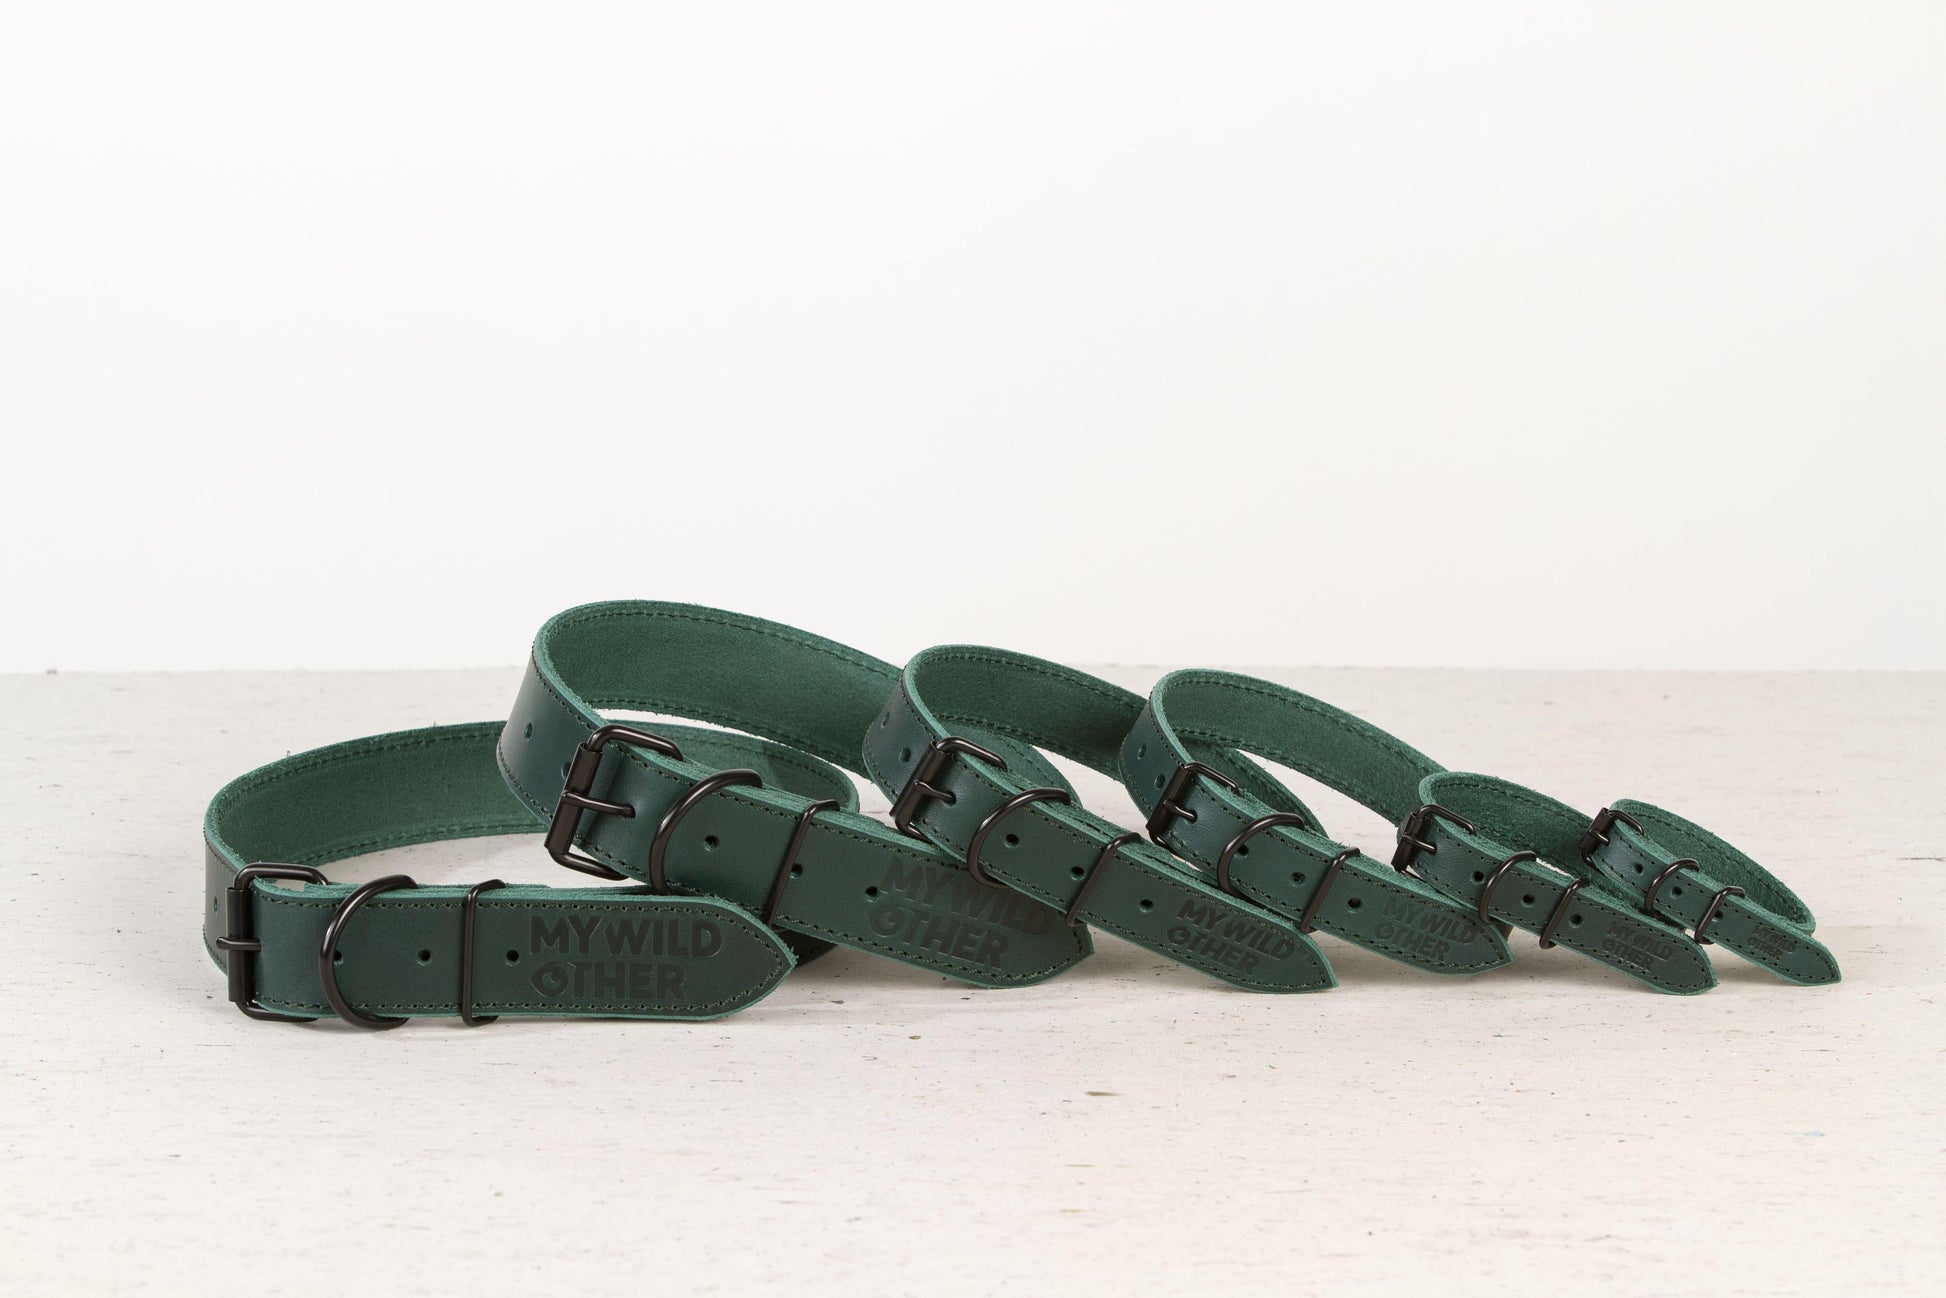 Handmade green leather dog collar - European handmade dog accessories by My Wild Other